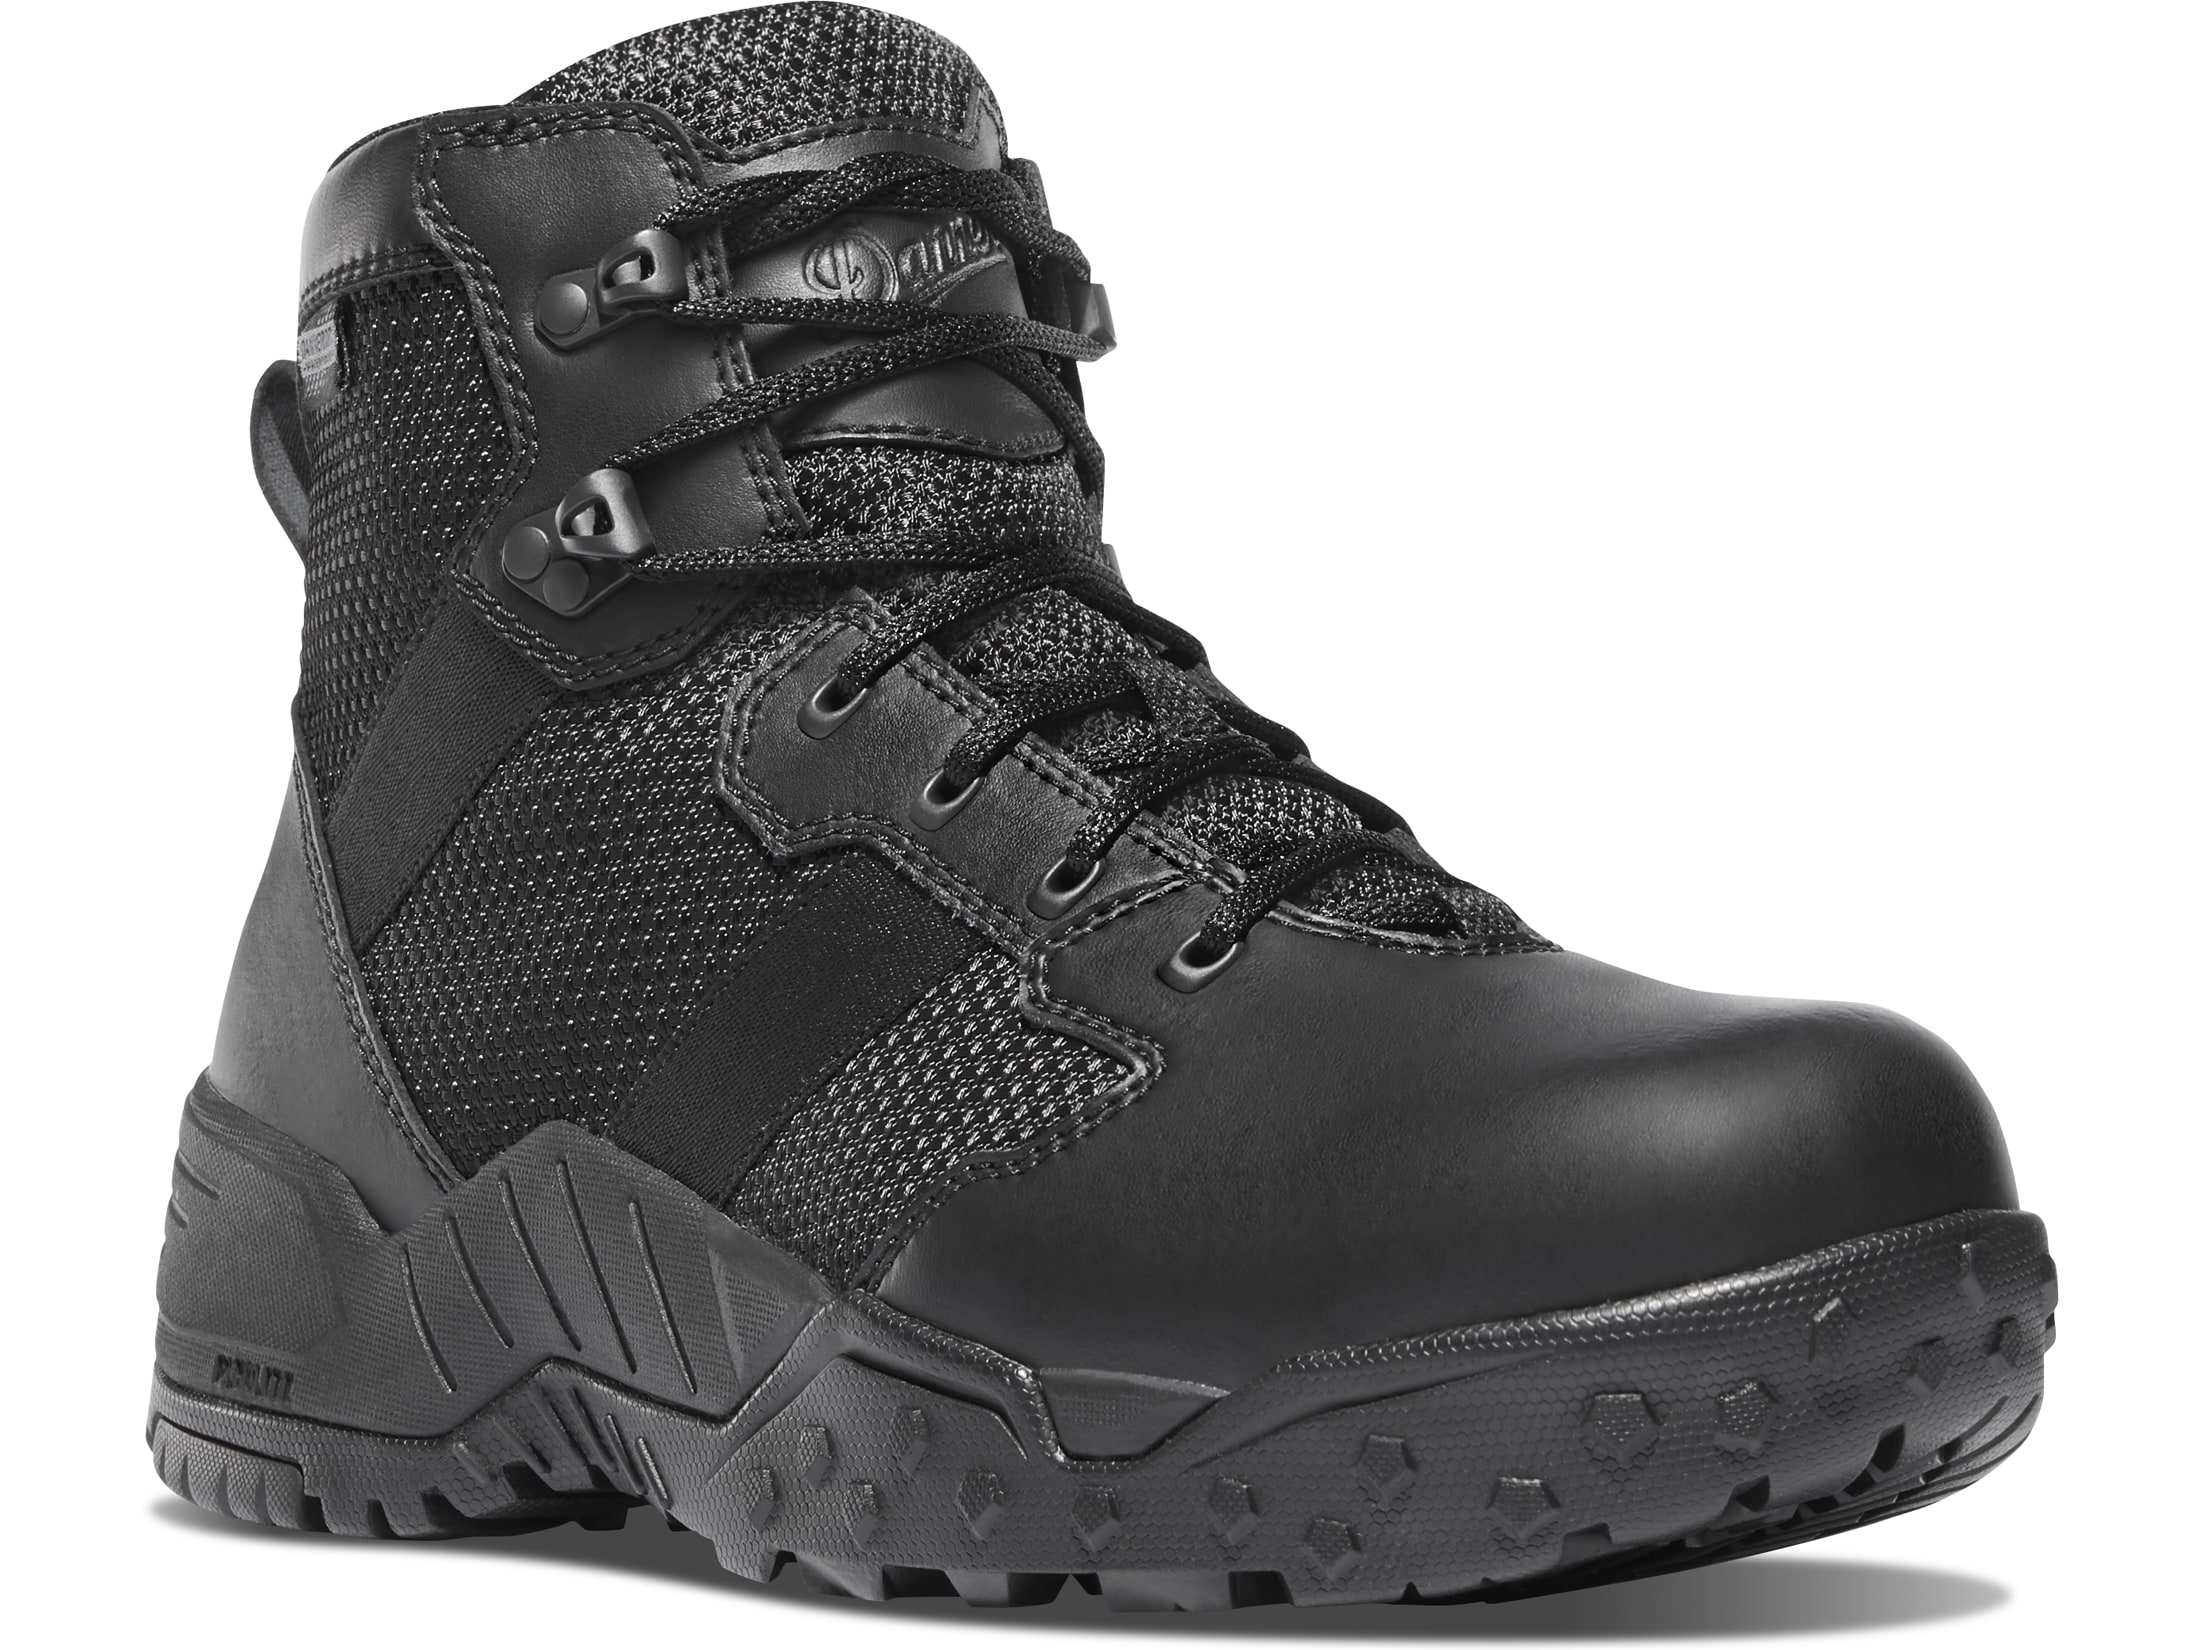 Danner Scorch 6 Waterproof Side-Zip Tactical Boots Leather/Nylon Black